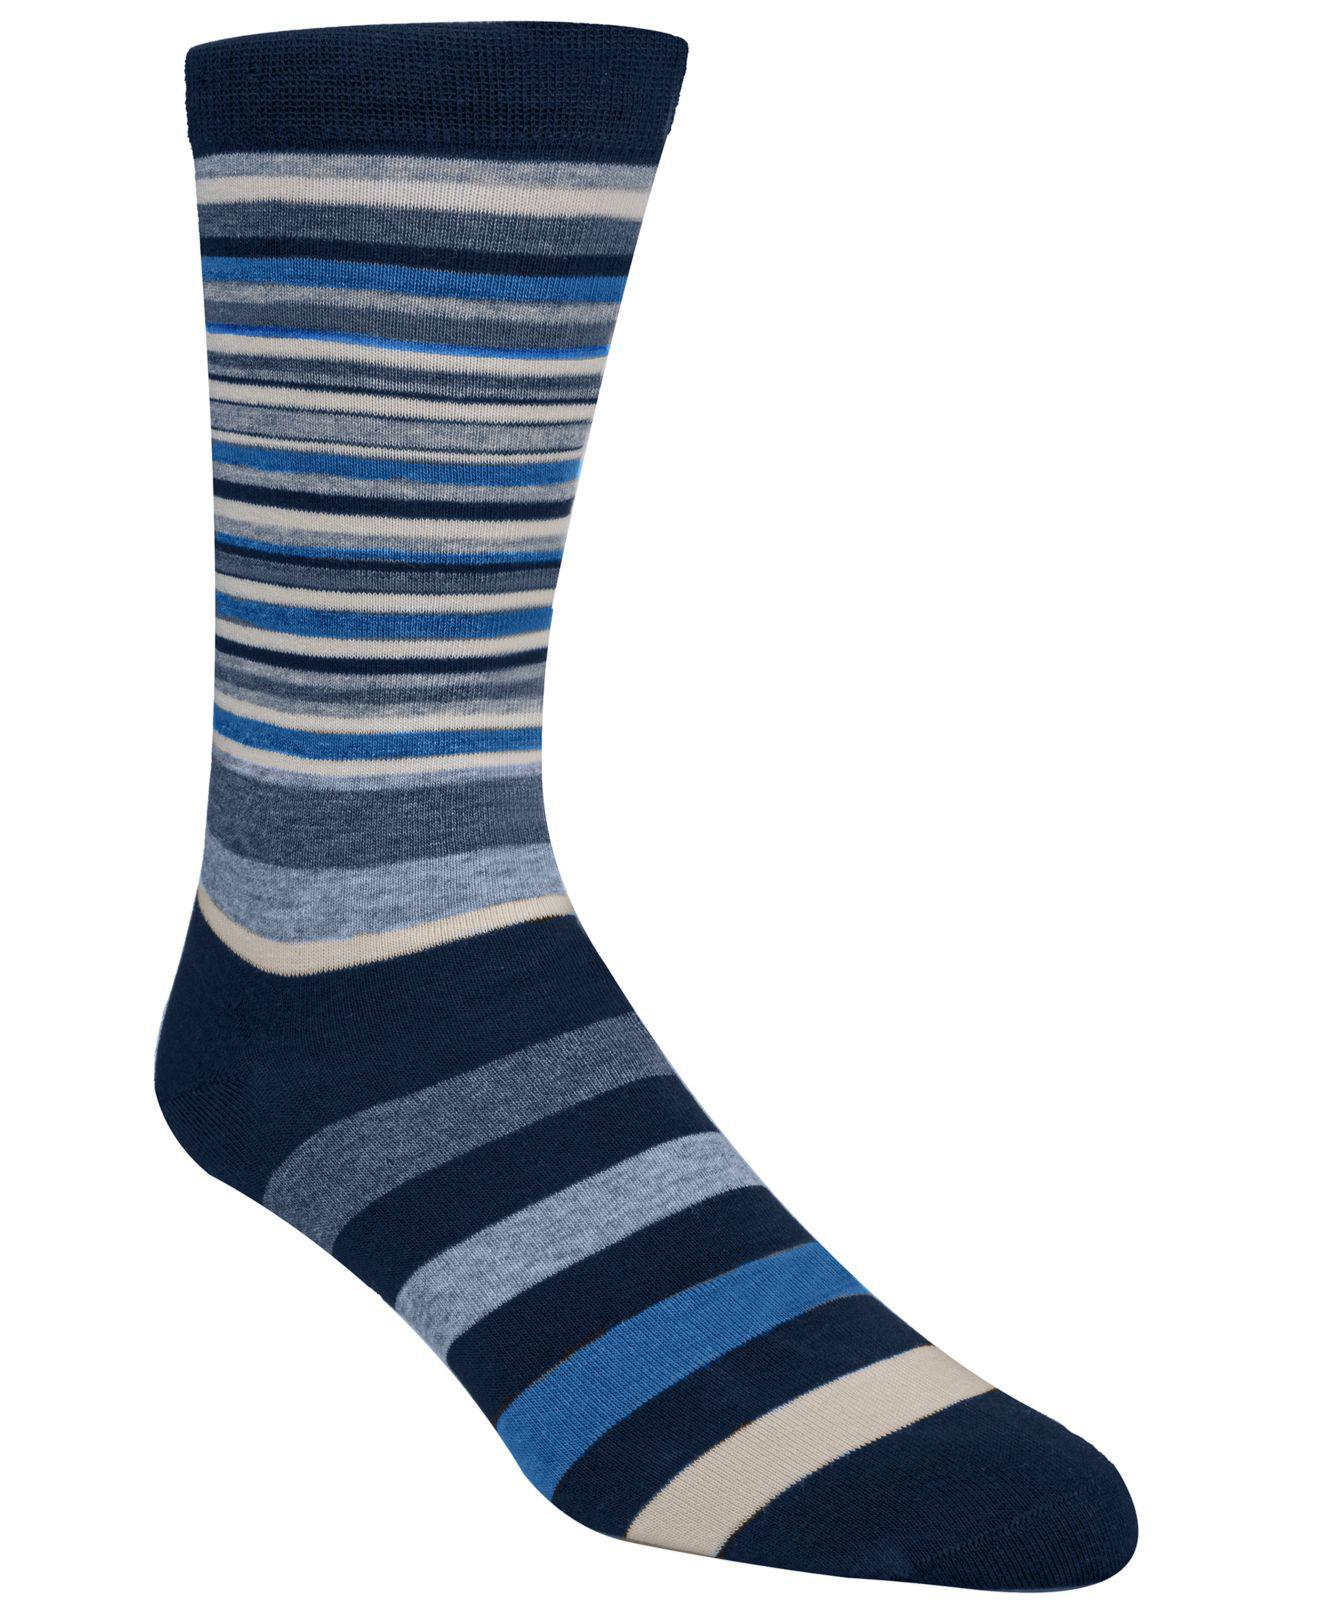 Cole Haan Cotton Town Stripe Crew Socks in Blue for Men - Lyst